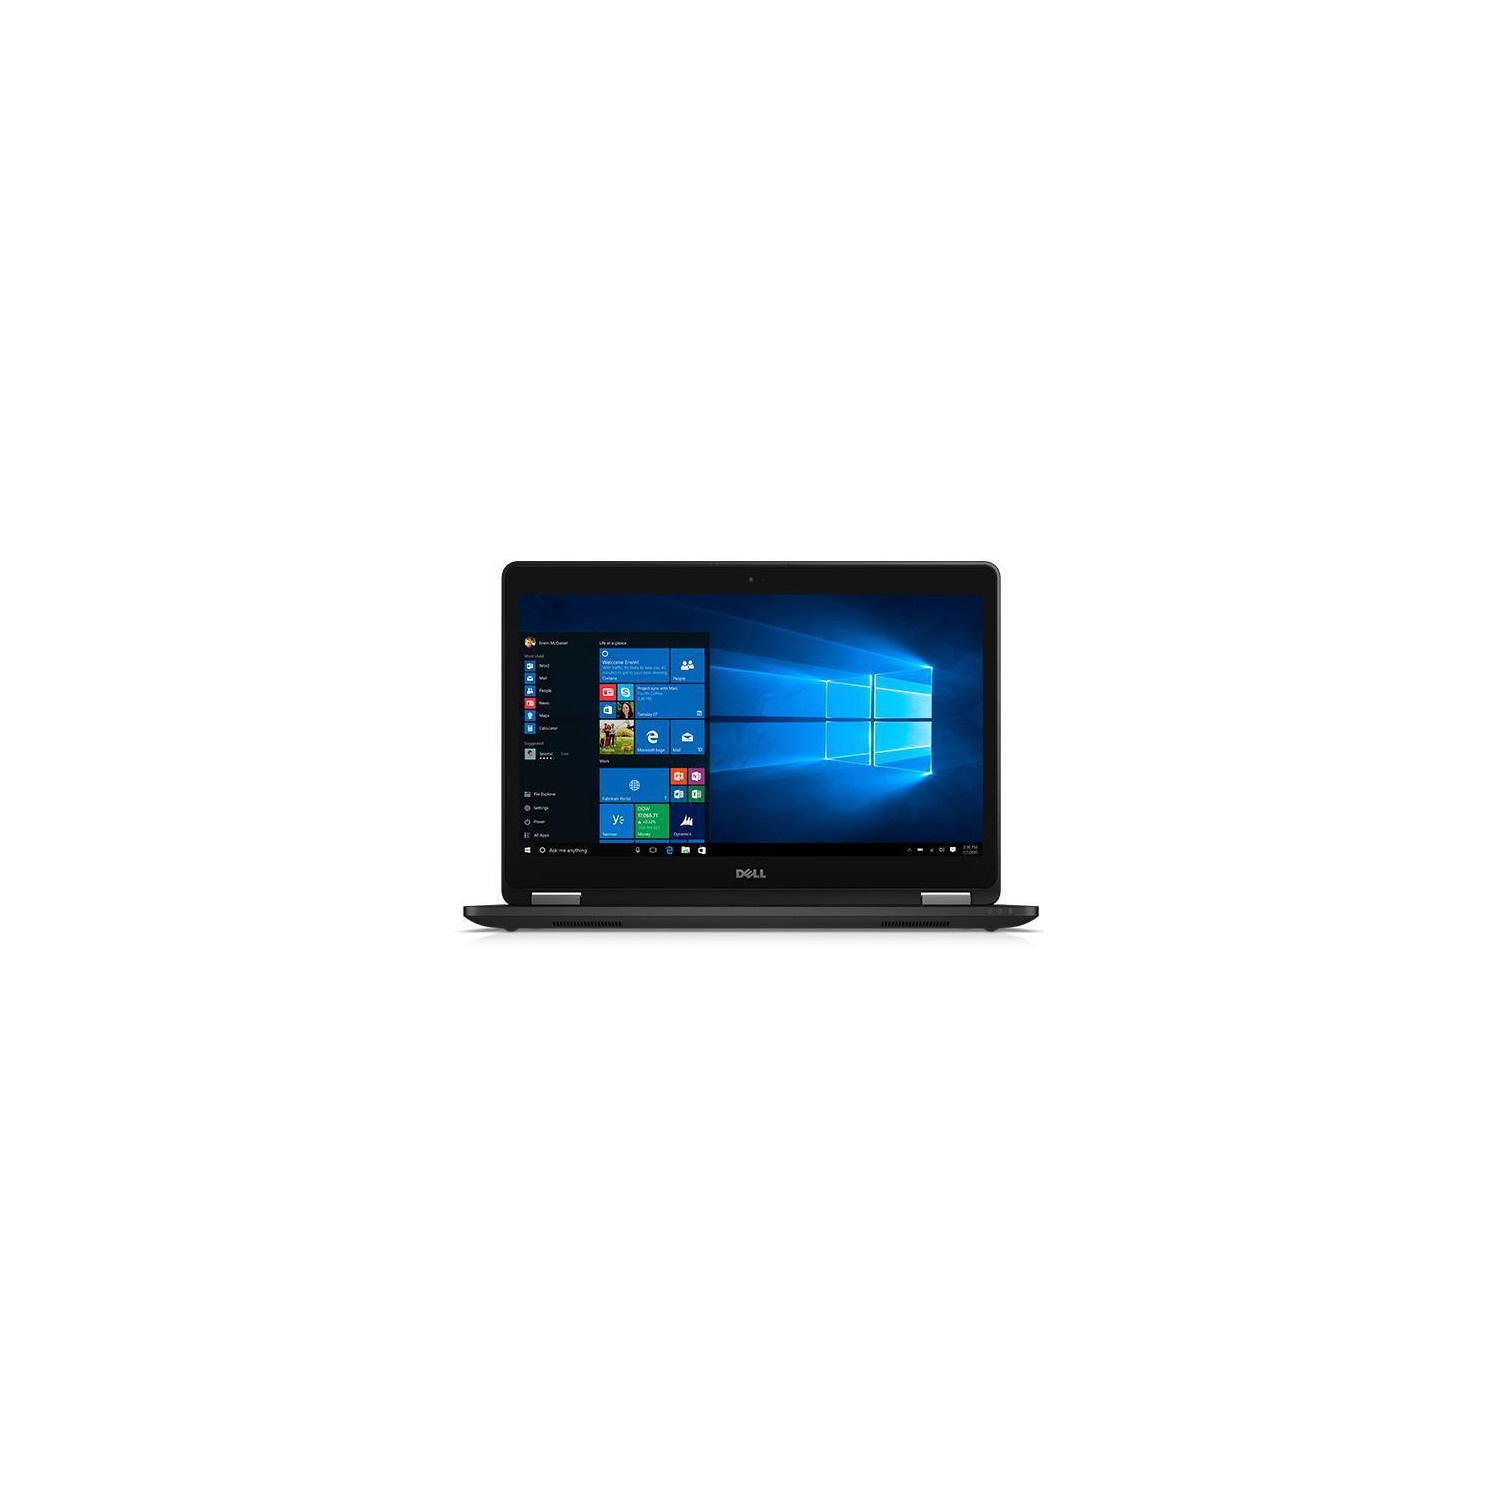 Refurbished (Good) - Dell Latitude E7470 Ultrabook: i5-6300U 2.4GHz, 8GB, 256GB SSD, HDMI, 14" (1600x900), Webcam, Backlit Keyboard, Win 10 Pro "â€œ